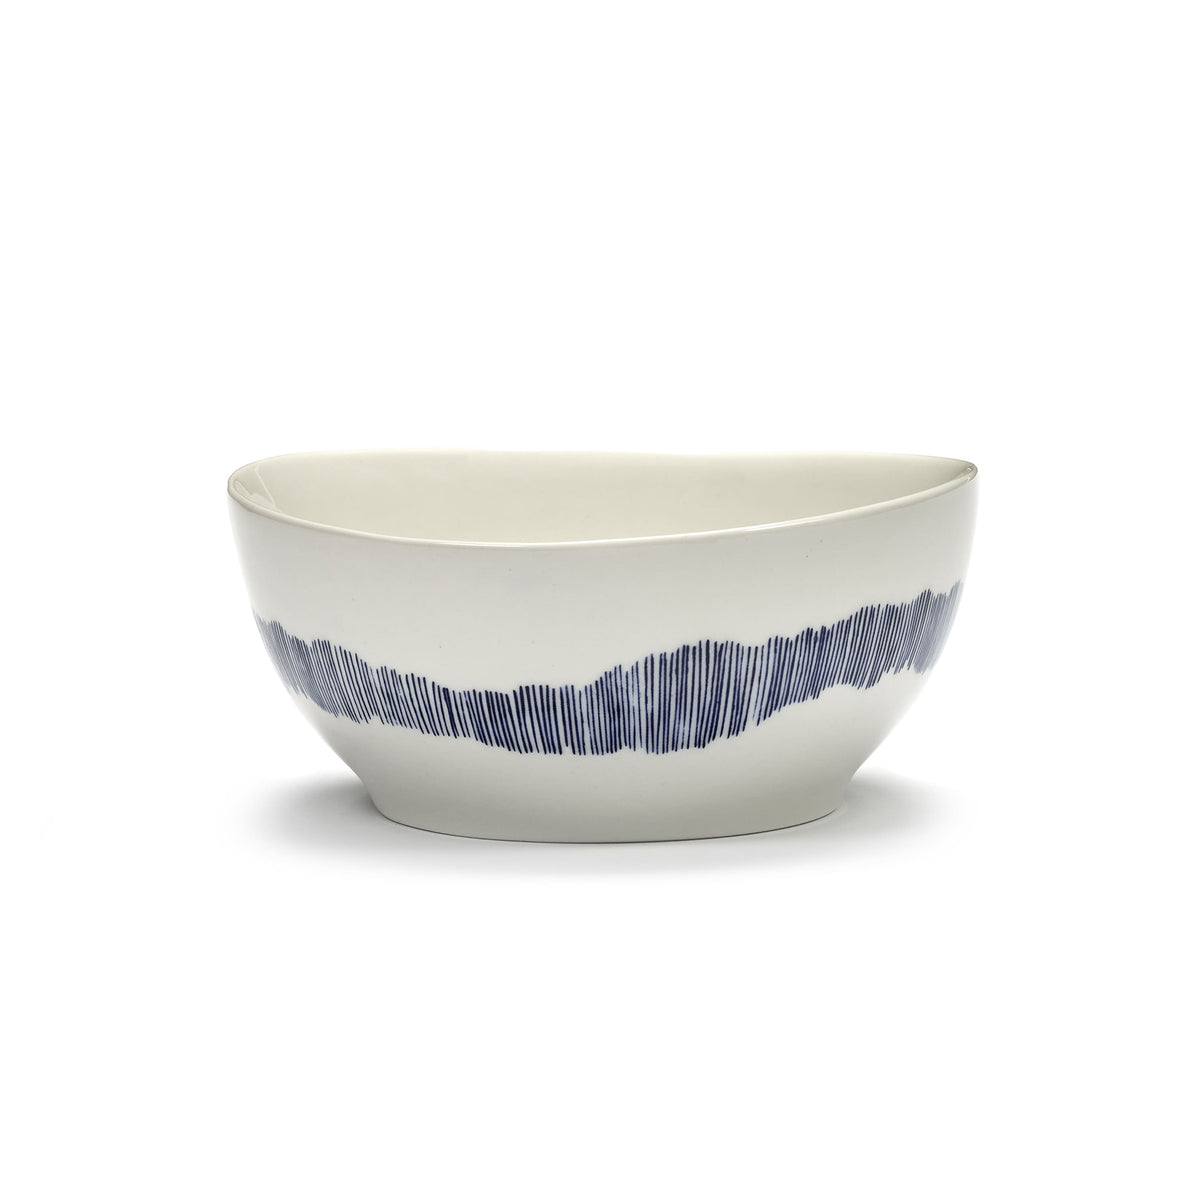 White Bowl with Blue Stripes - L